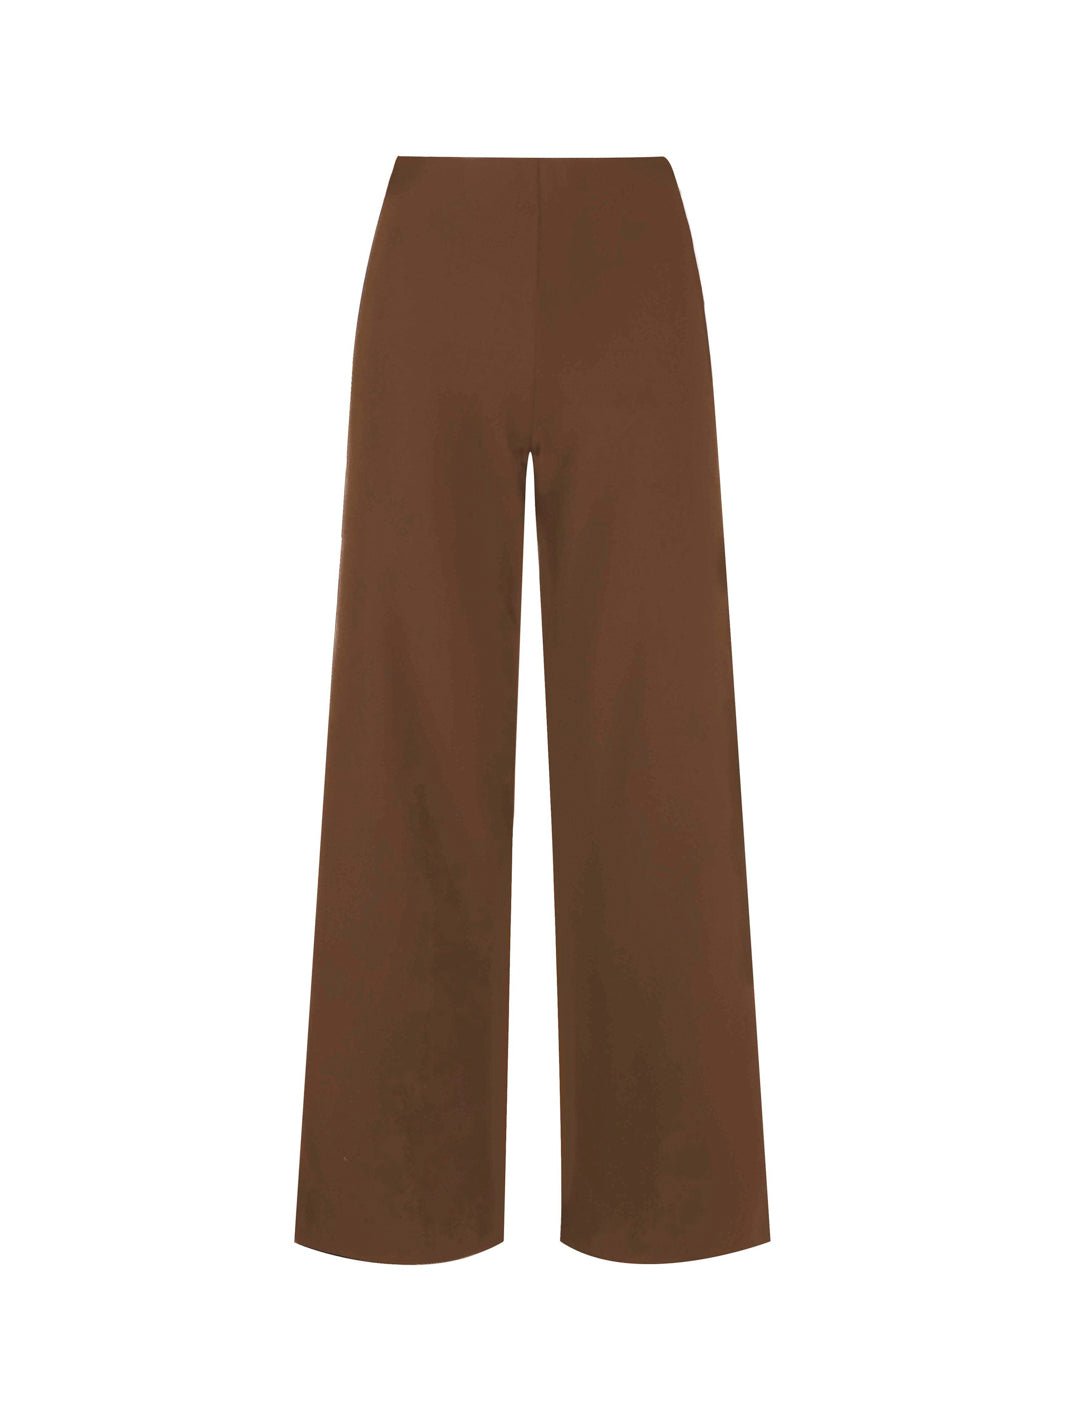 Liberté Henne wide pants brown - Online-Mode